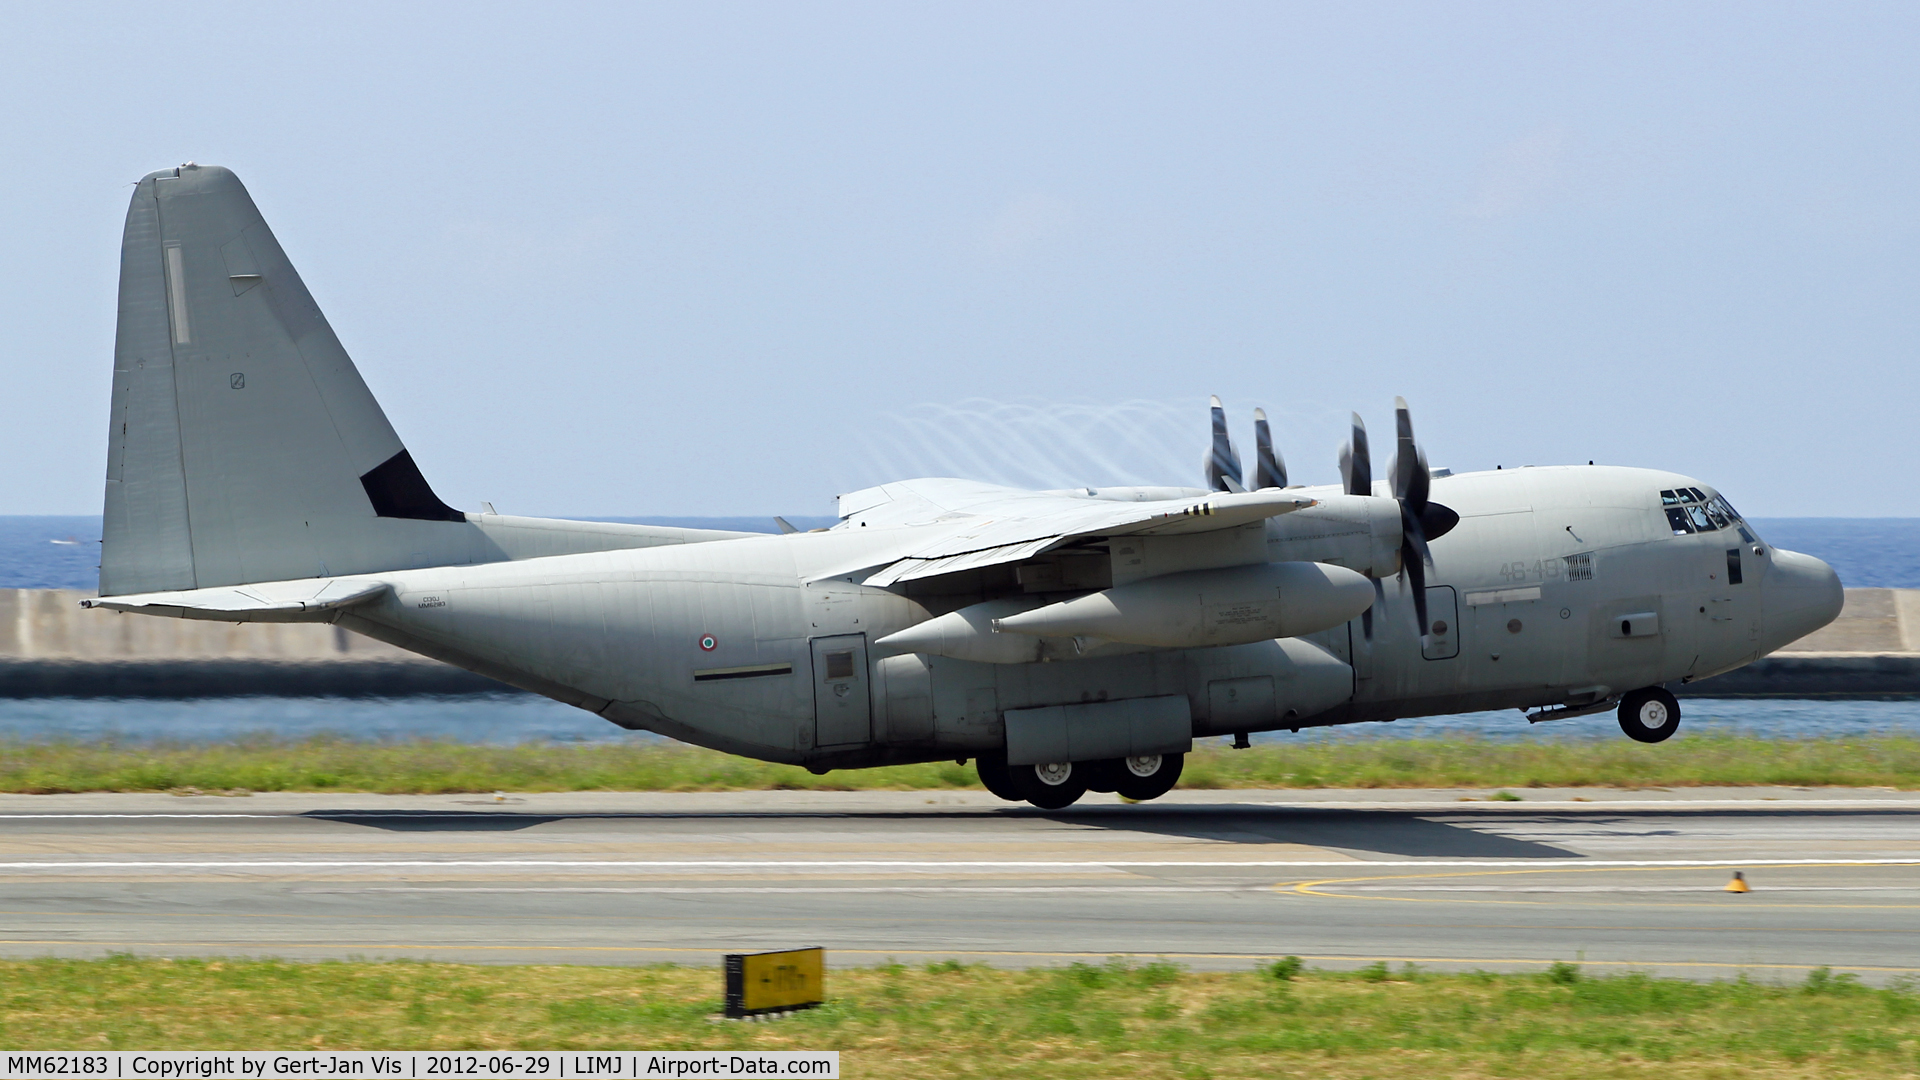 MM62183, 2001 Lockheed Martin KC-130J Hercules C/N 382-5512, Making a touch & go at Genua airport